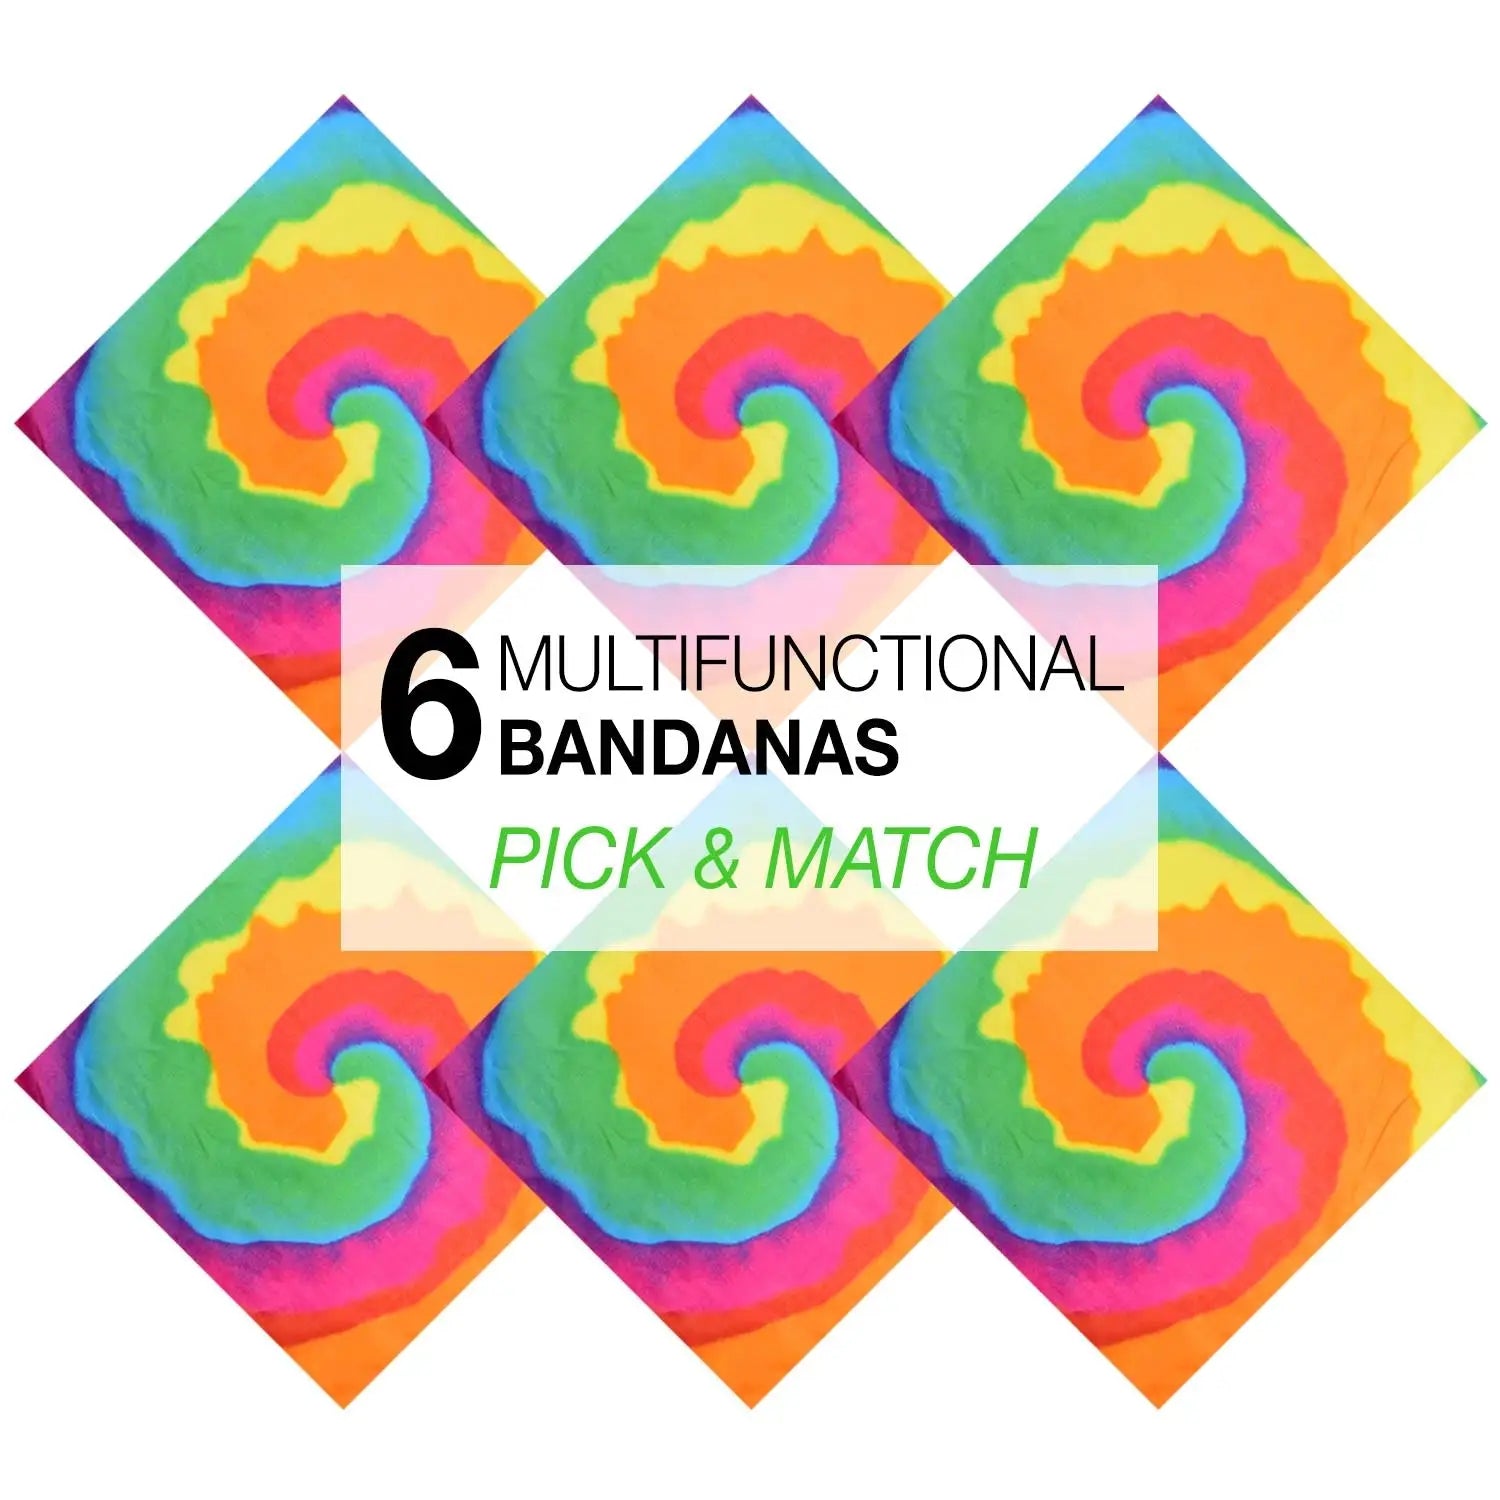 Pride Rainbow Flag Bandana Set - 6 Multifunctional Rainbow Swirls